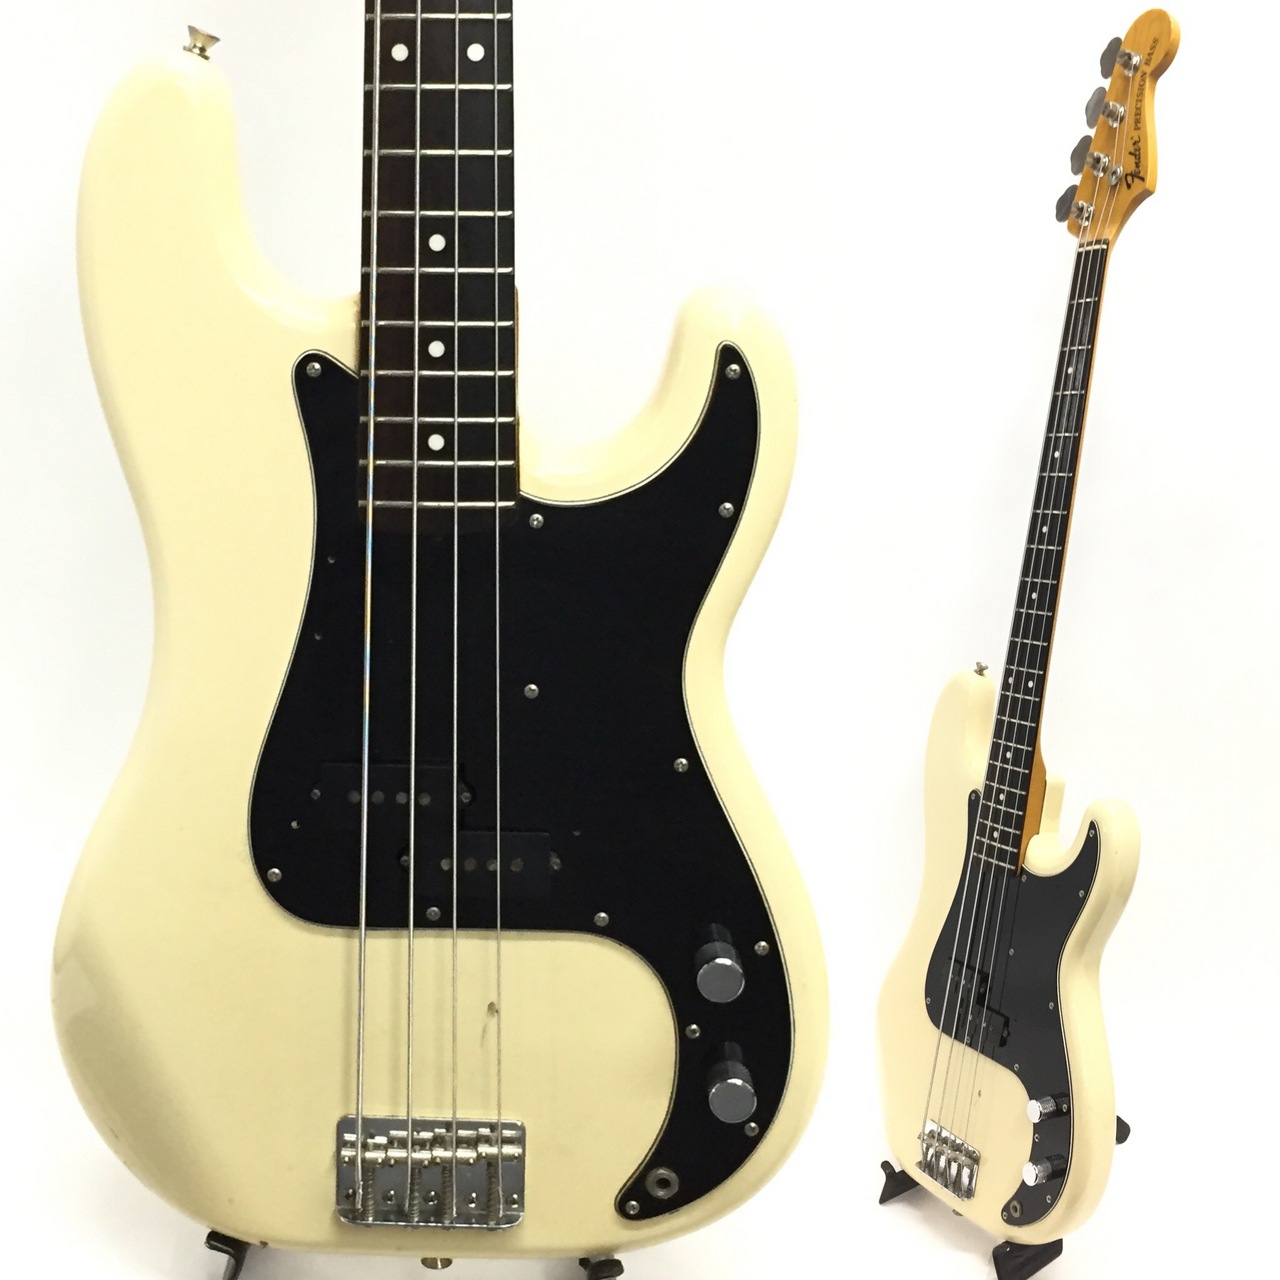 Fender Japan PB70-70US Crafted In Japan Nシリアル ダイナ楽器組込 